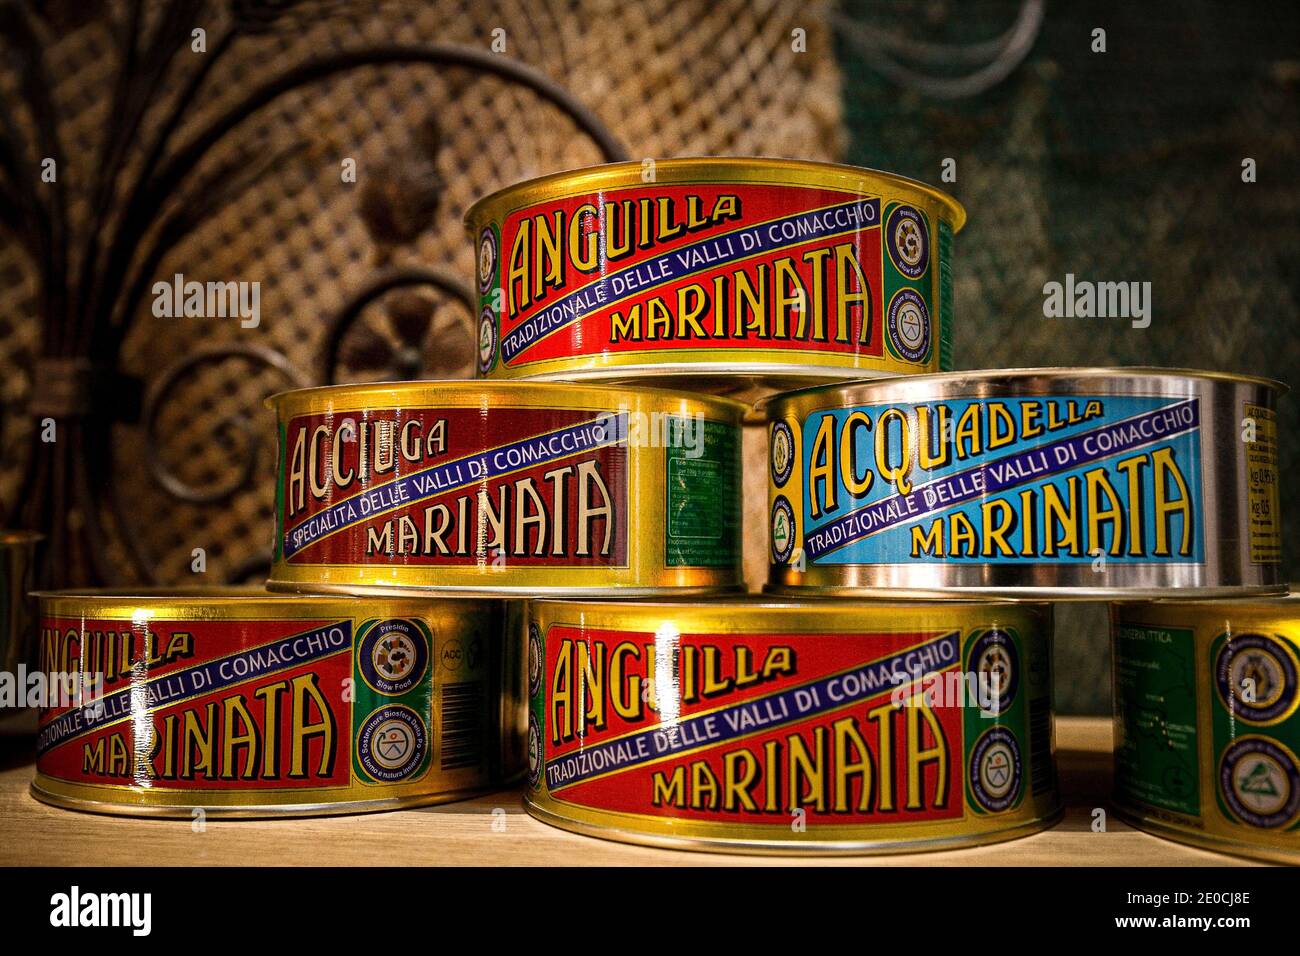 Italy Emilia Romagna - Valli di Comacchio - canned food products - eel marinata, anchovy marinata and acquadella marinata Stock Photo